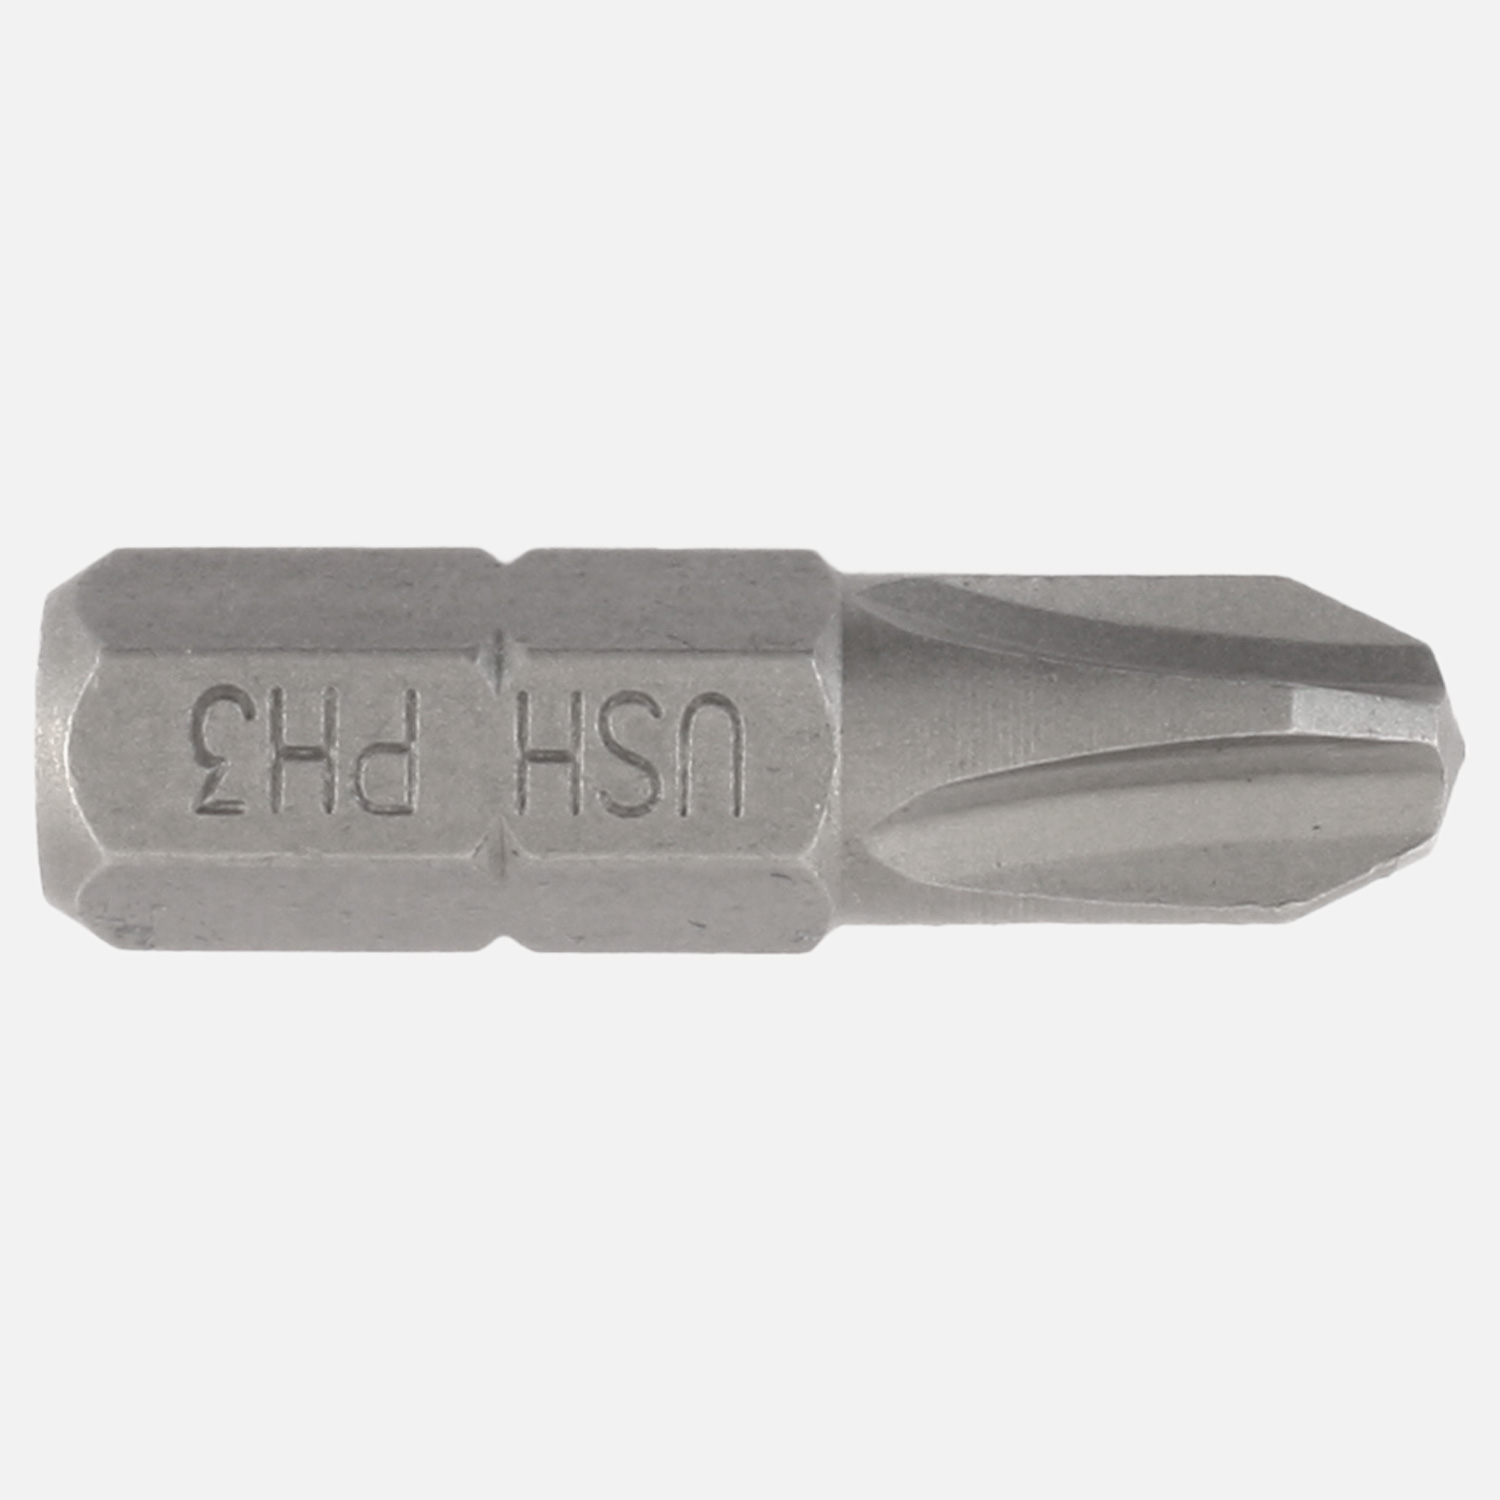 10 Phillips Bit - PH3 - 1/4 Zoll C 6,3 Hausmarke, Länge 25 mm